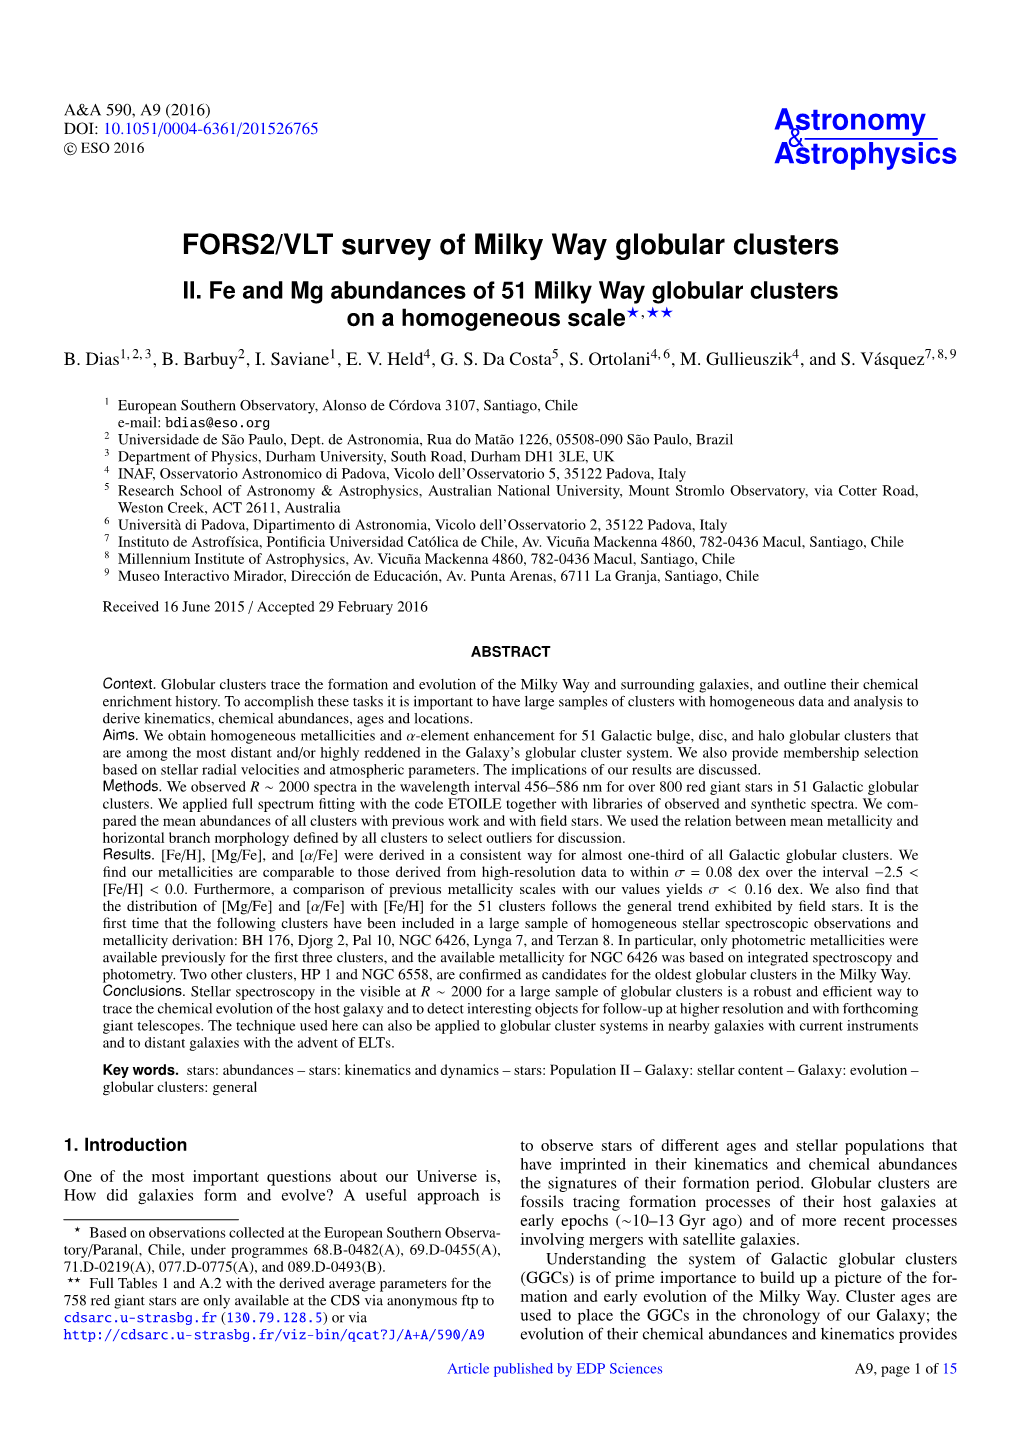 FORS2/VLT Survey of Milky Way Globular Clusters II